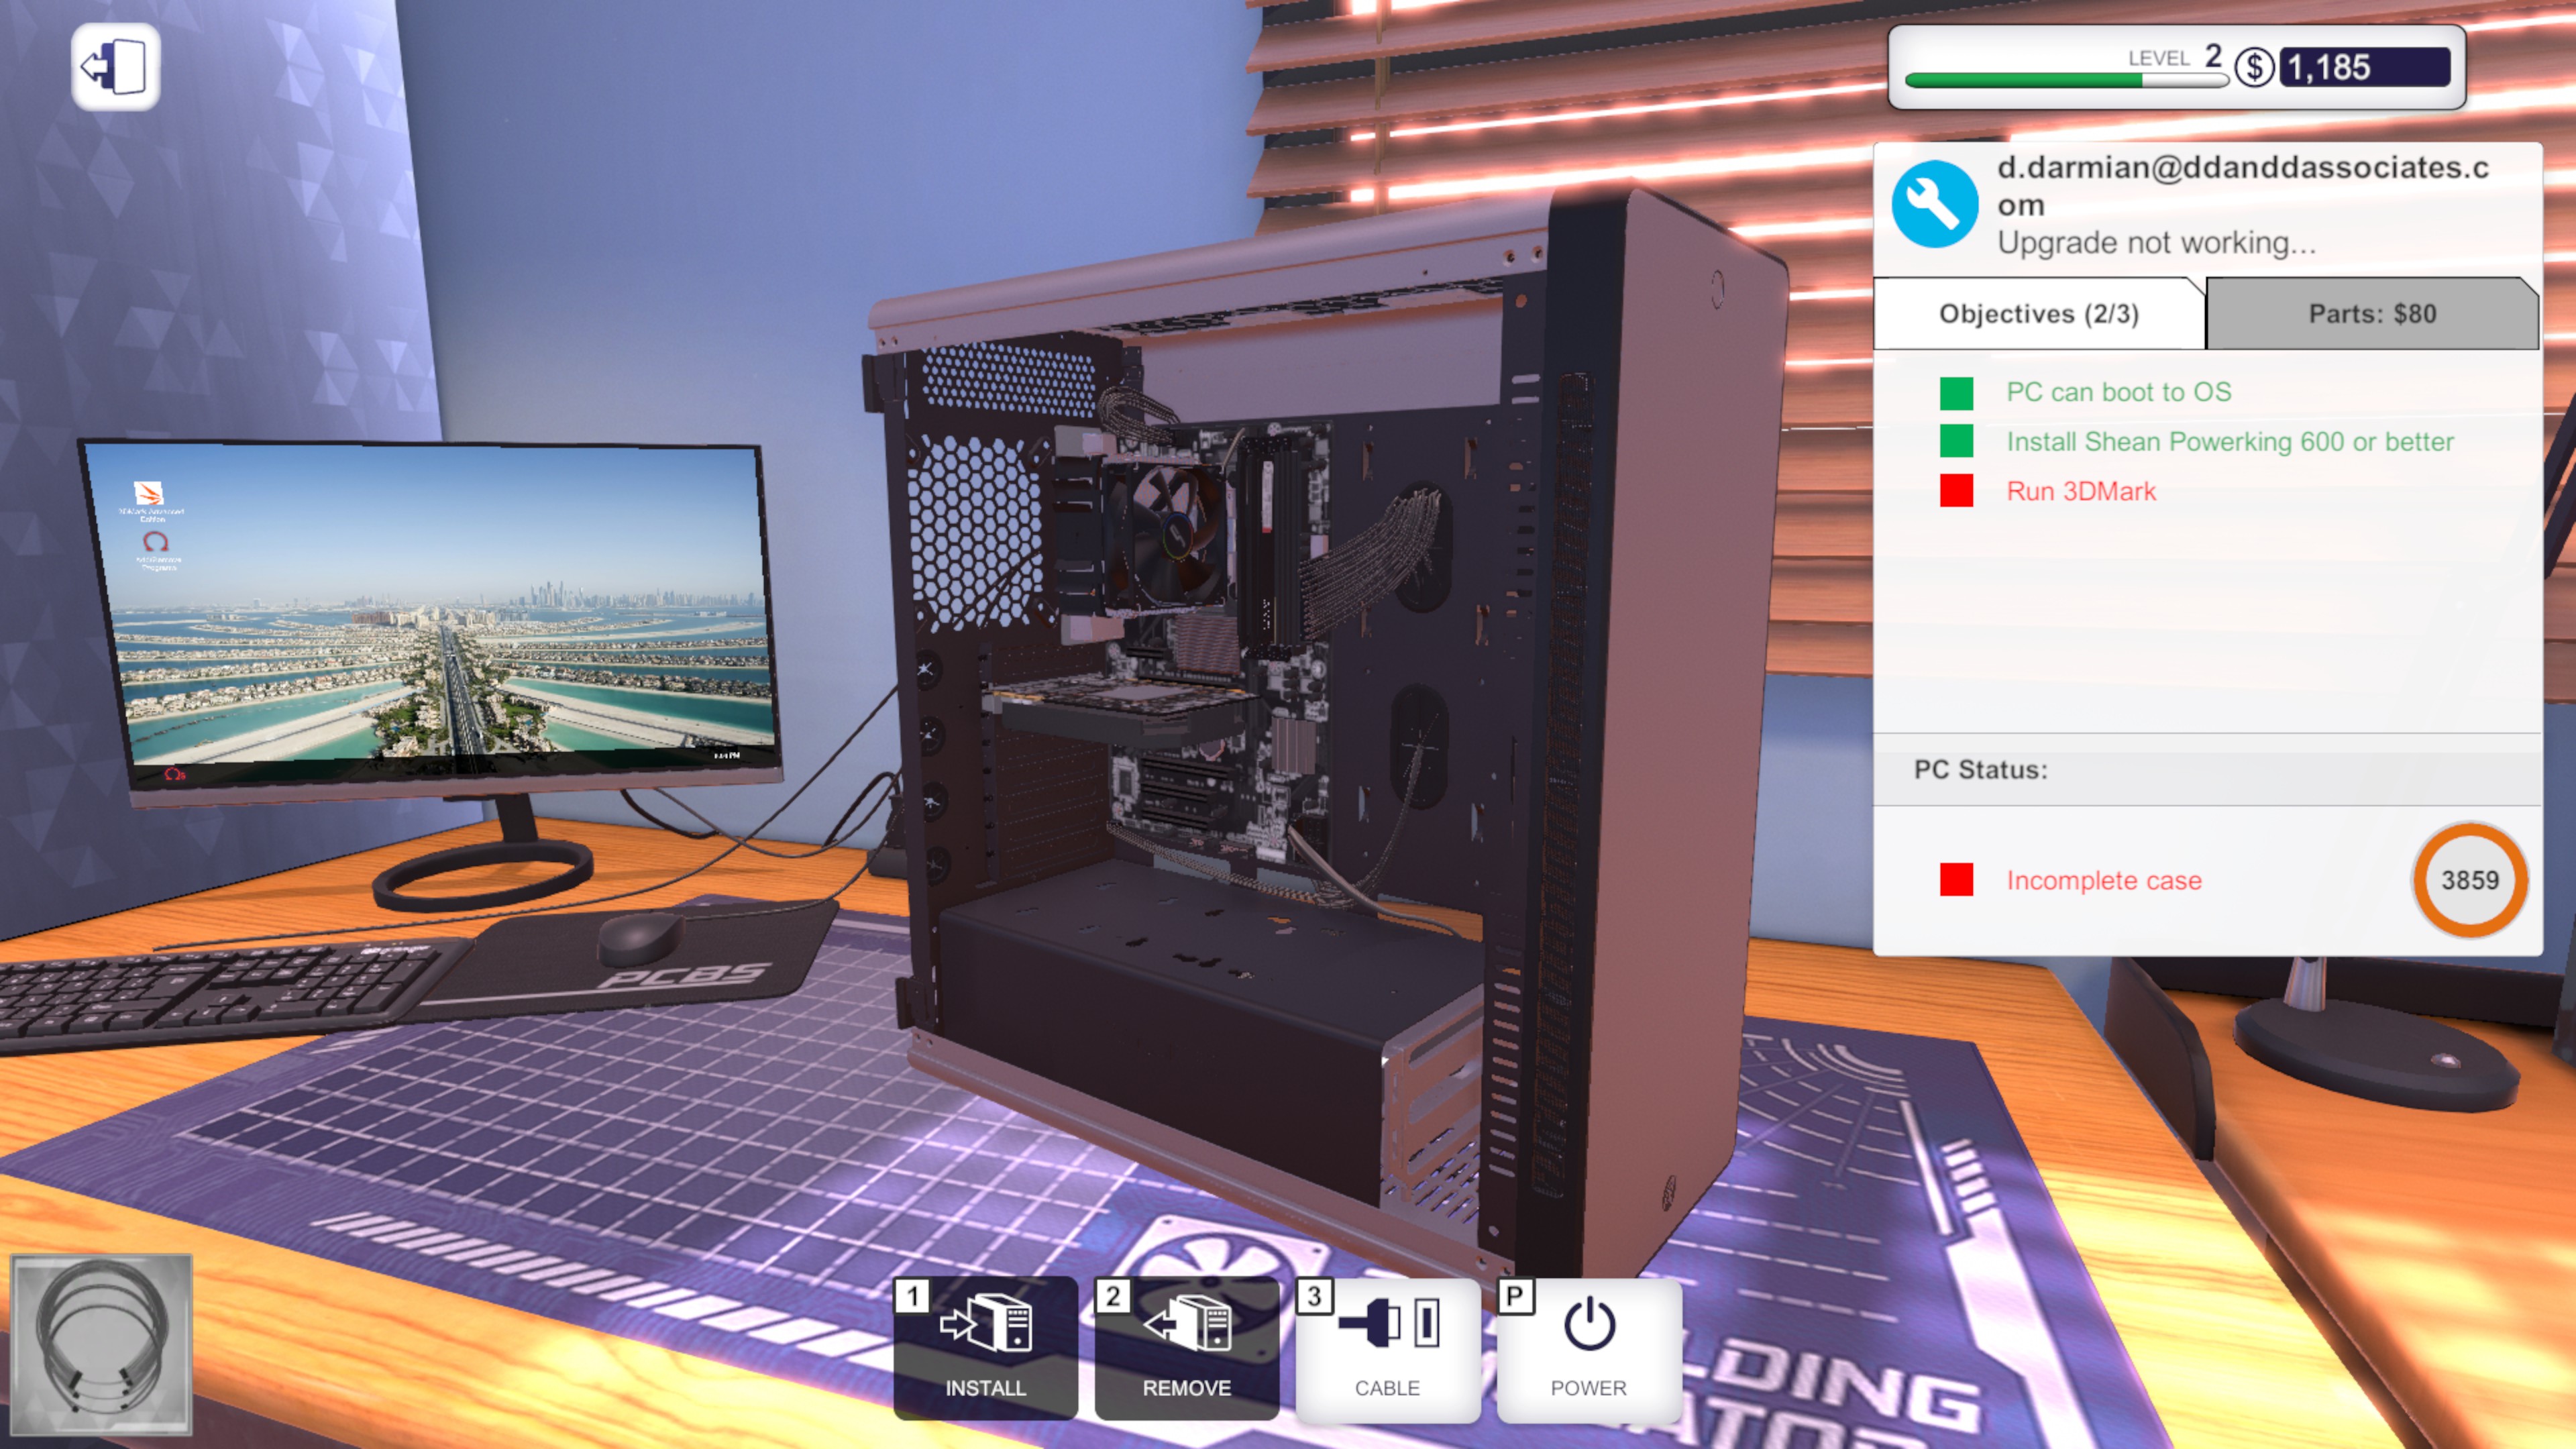 Análise, PC Building Simulator (PC)